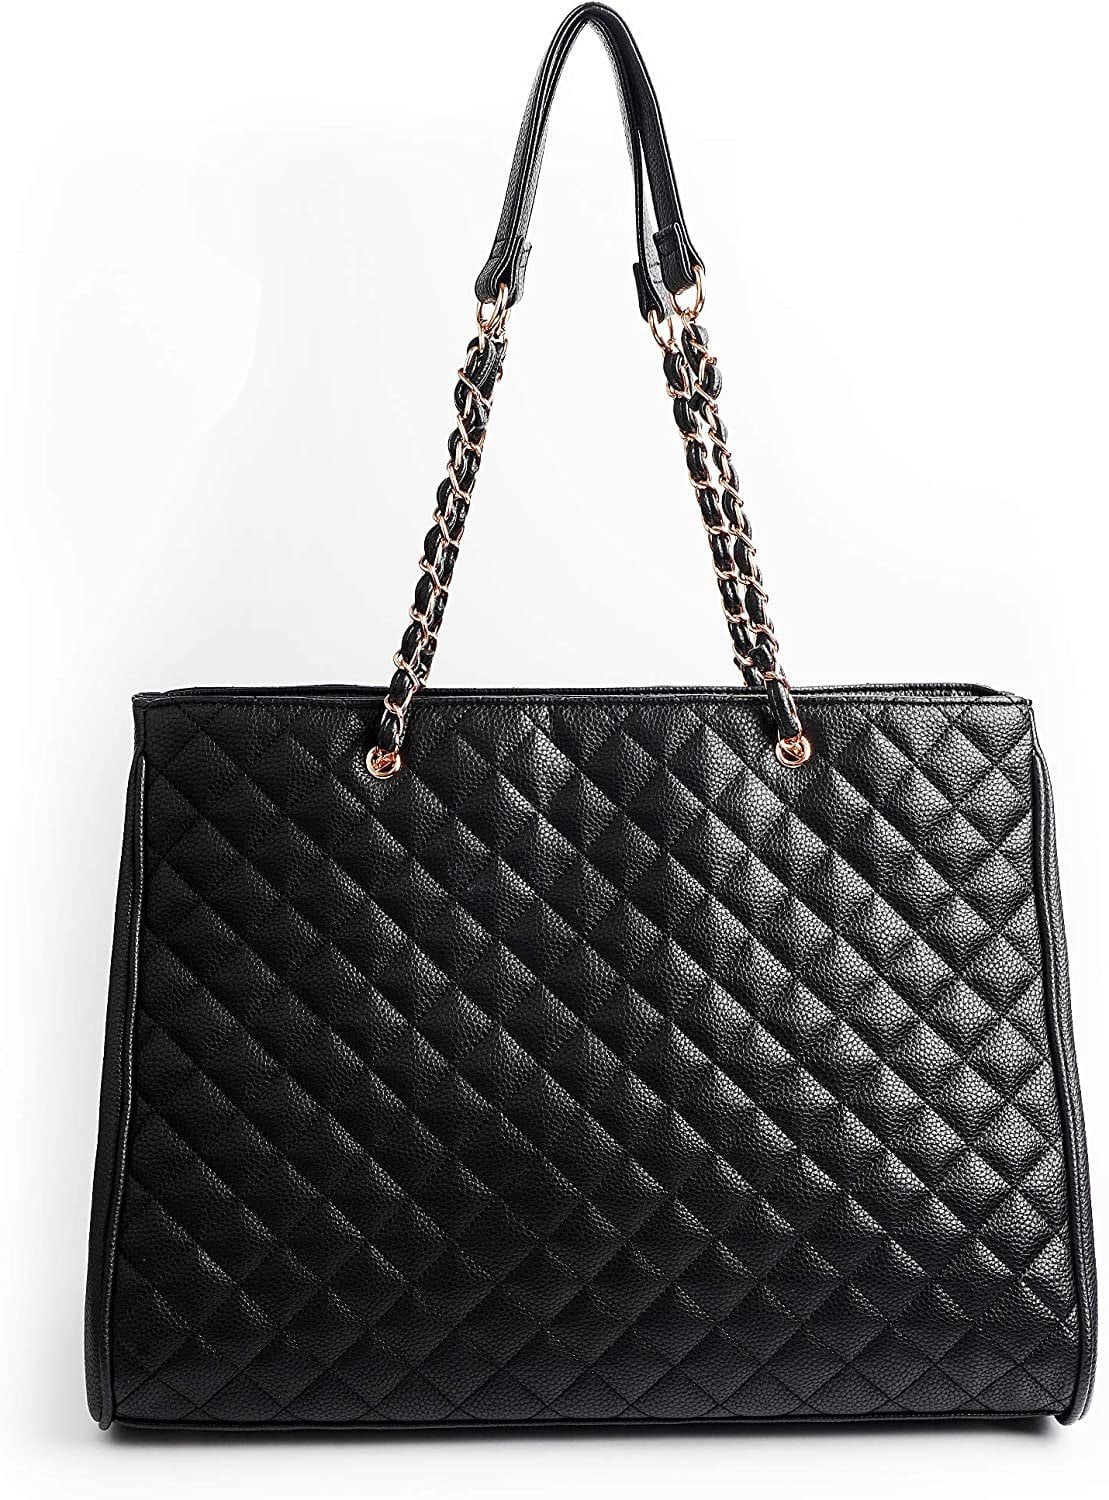 Women Ladies Designer Handbags Purses Large Shoulder Bags Tote Top Handle Work Bags Hobo with Matching Wallet